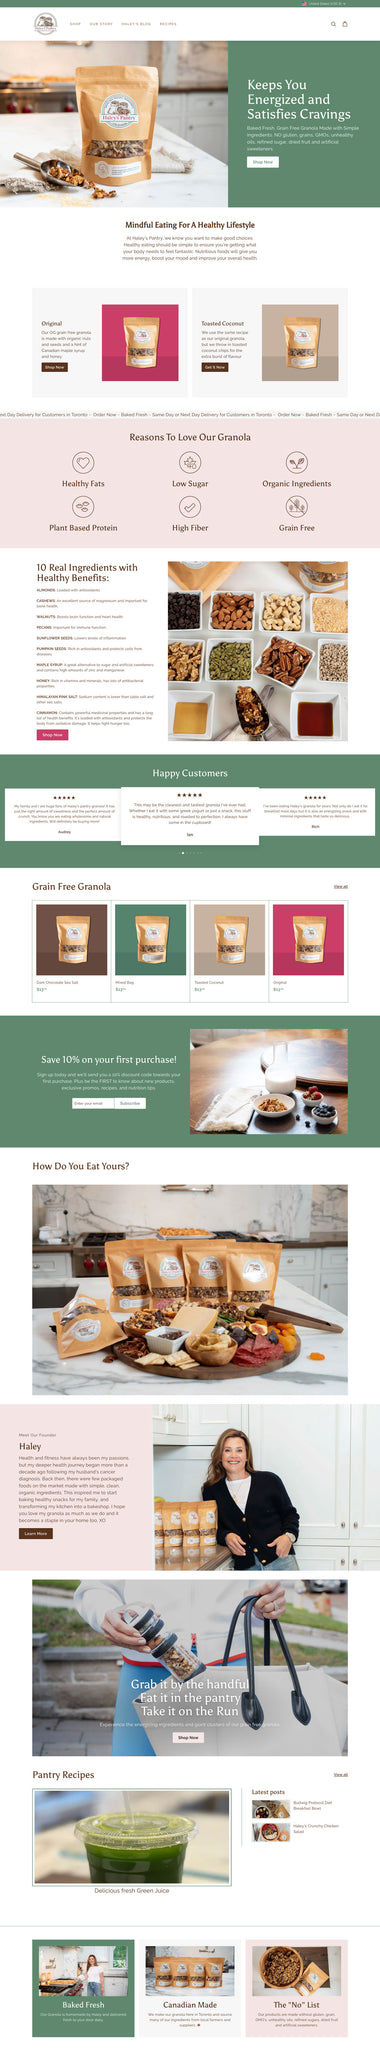 shopify website design for food product granola company Toronto